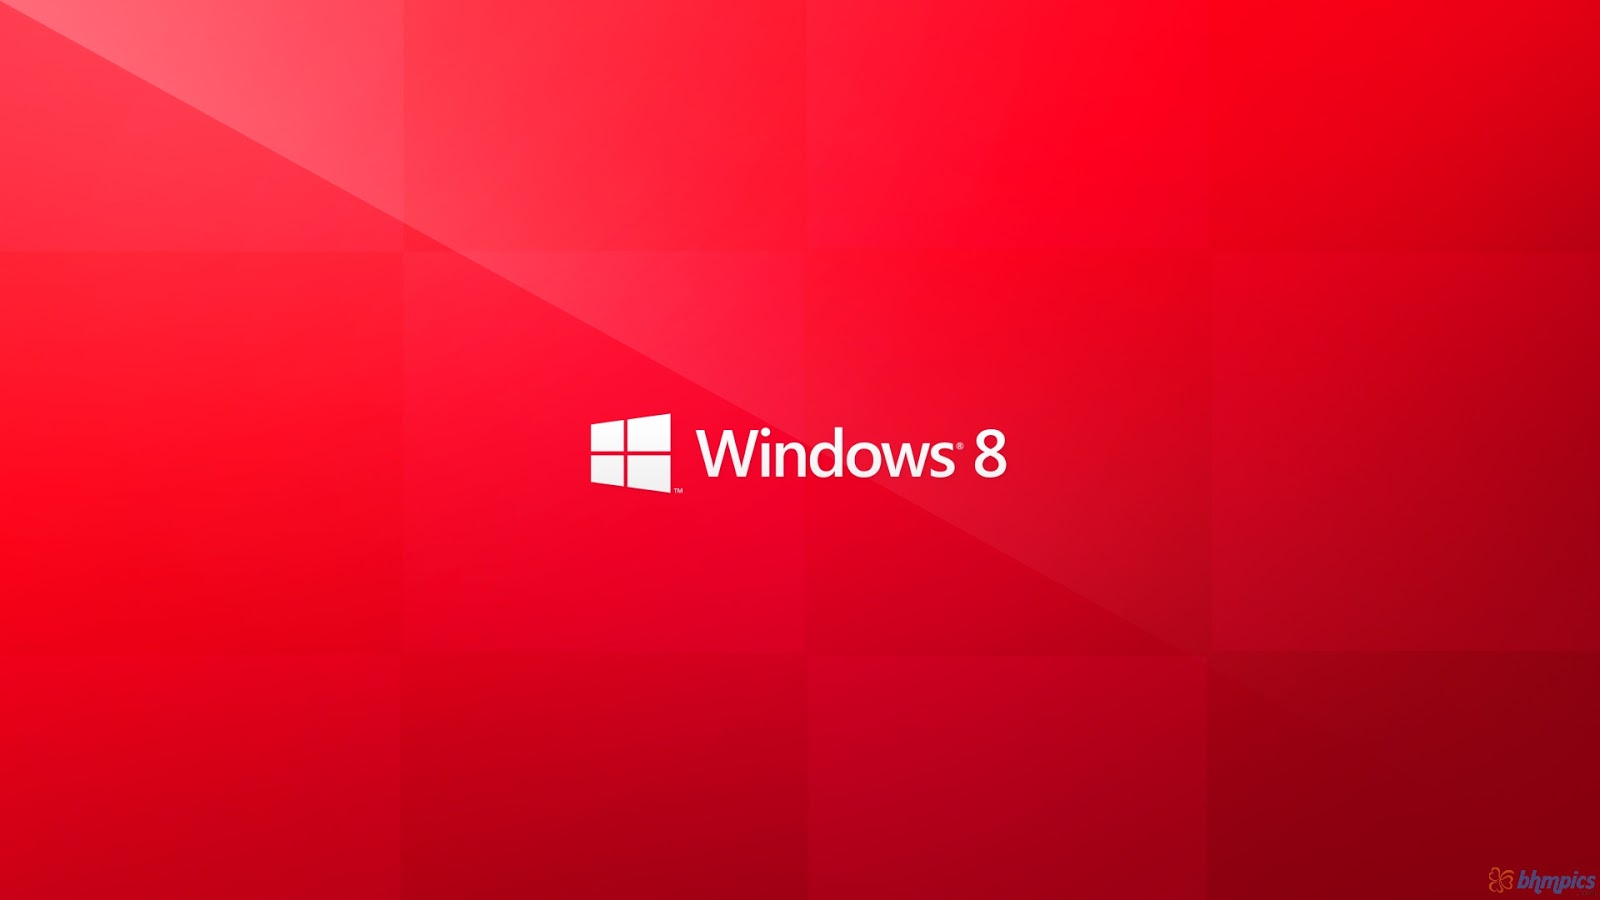  wallpaper windows 8 metro red free wallpaper download for desktop pc